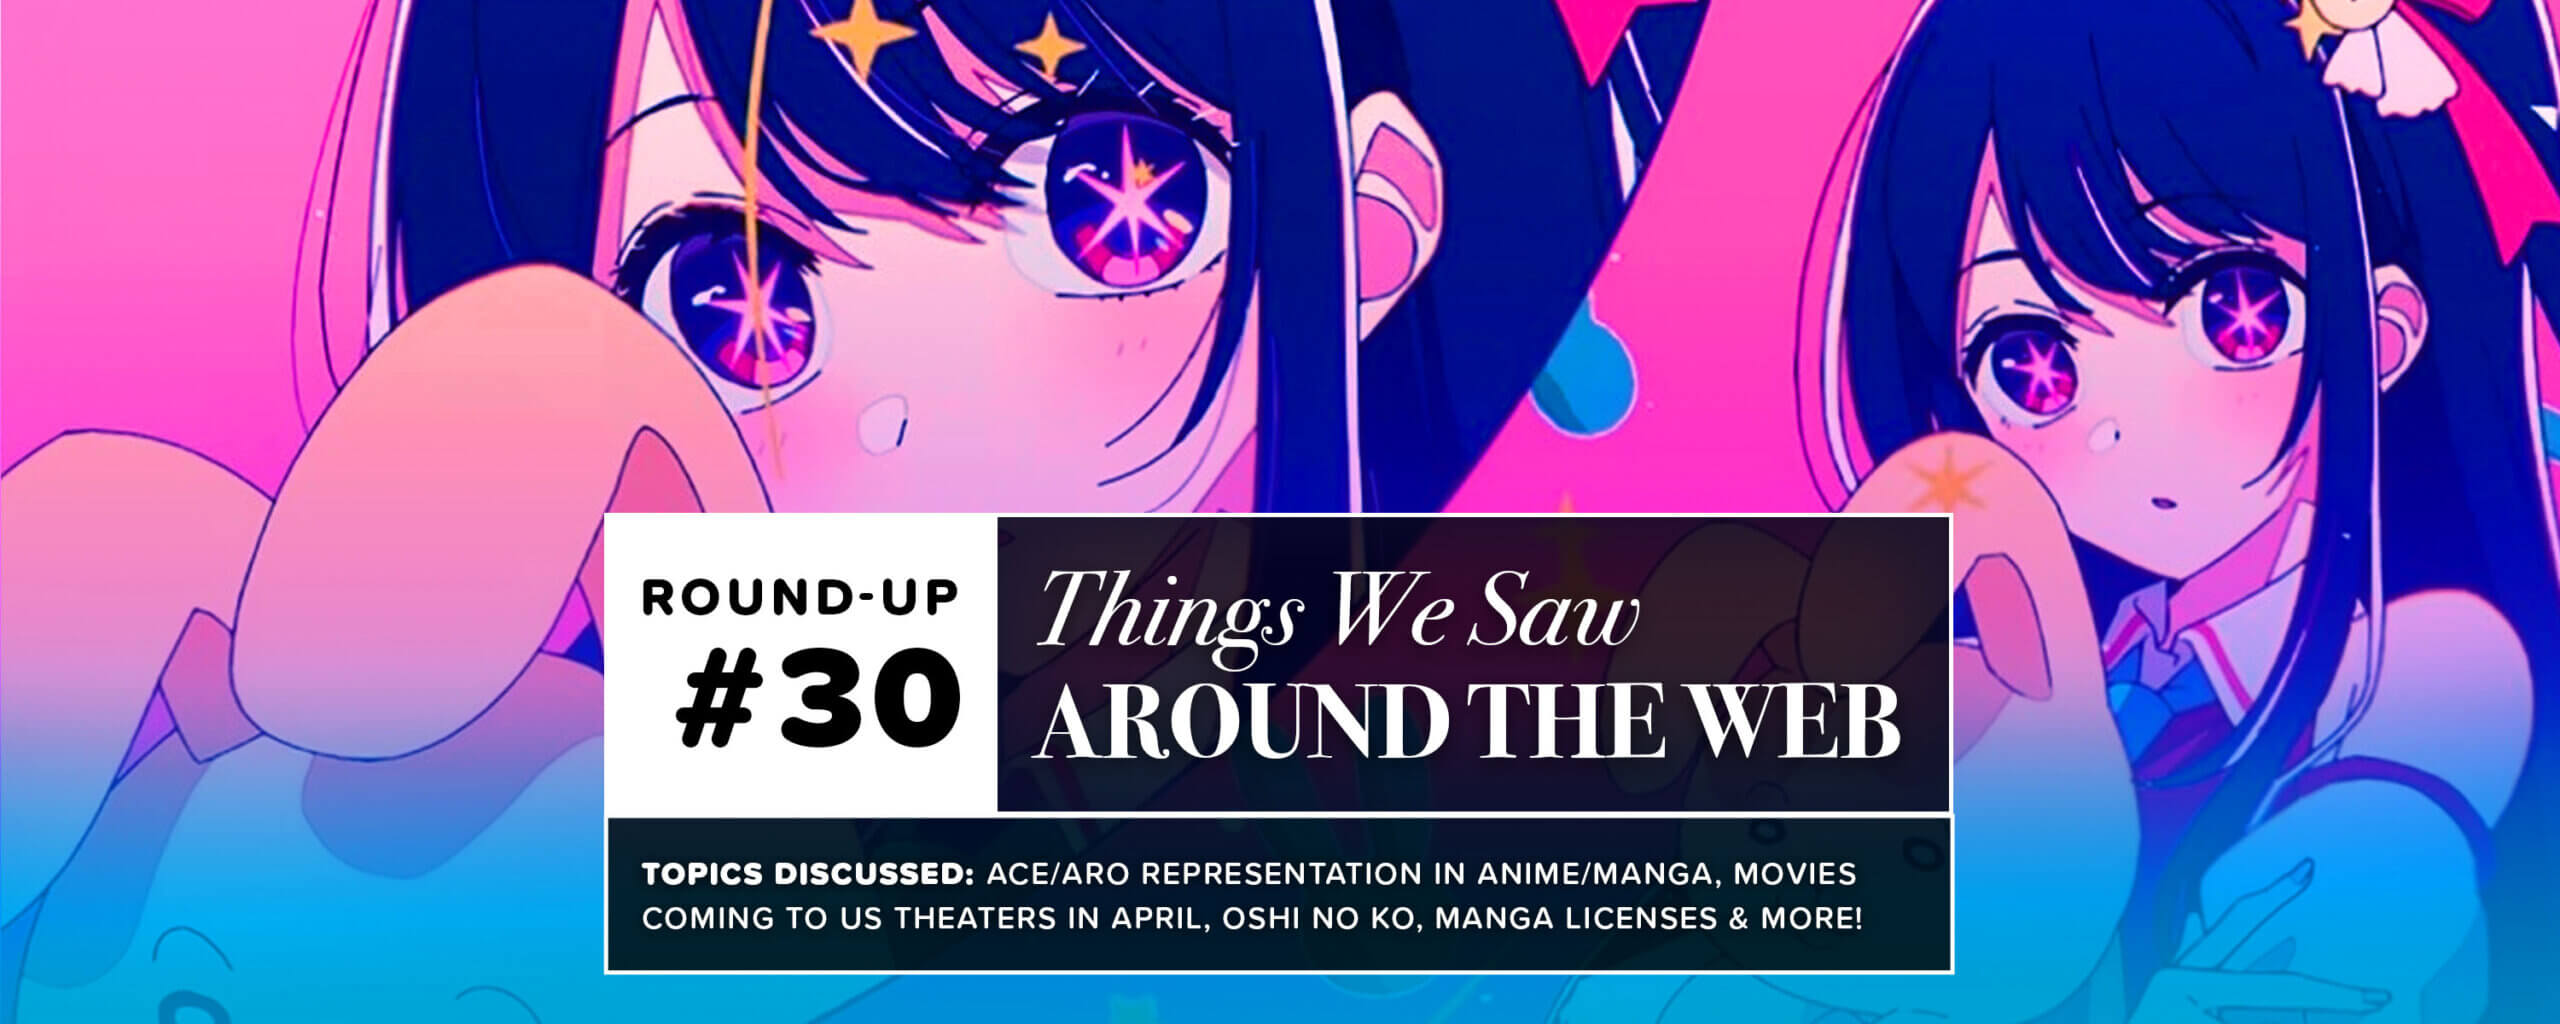 Things We Saw Around The Web #30: Ace/Aro Representation in Anime/Manga,  Oshi no Ko, Manga License announcements